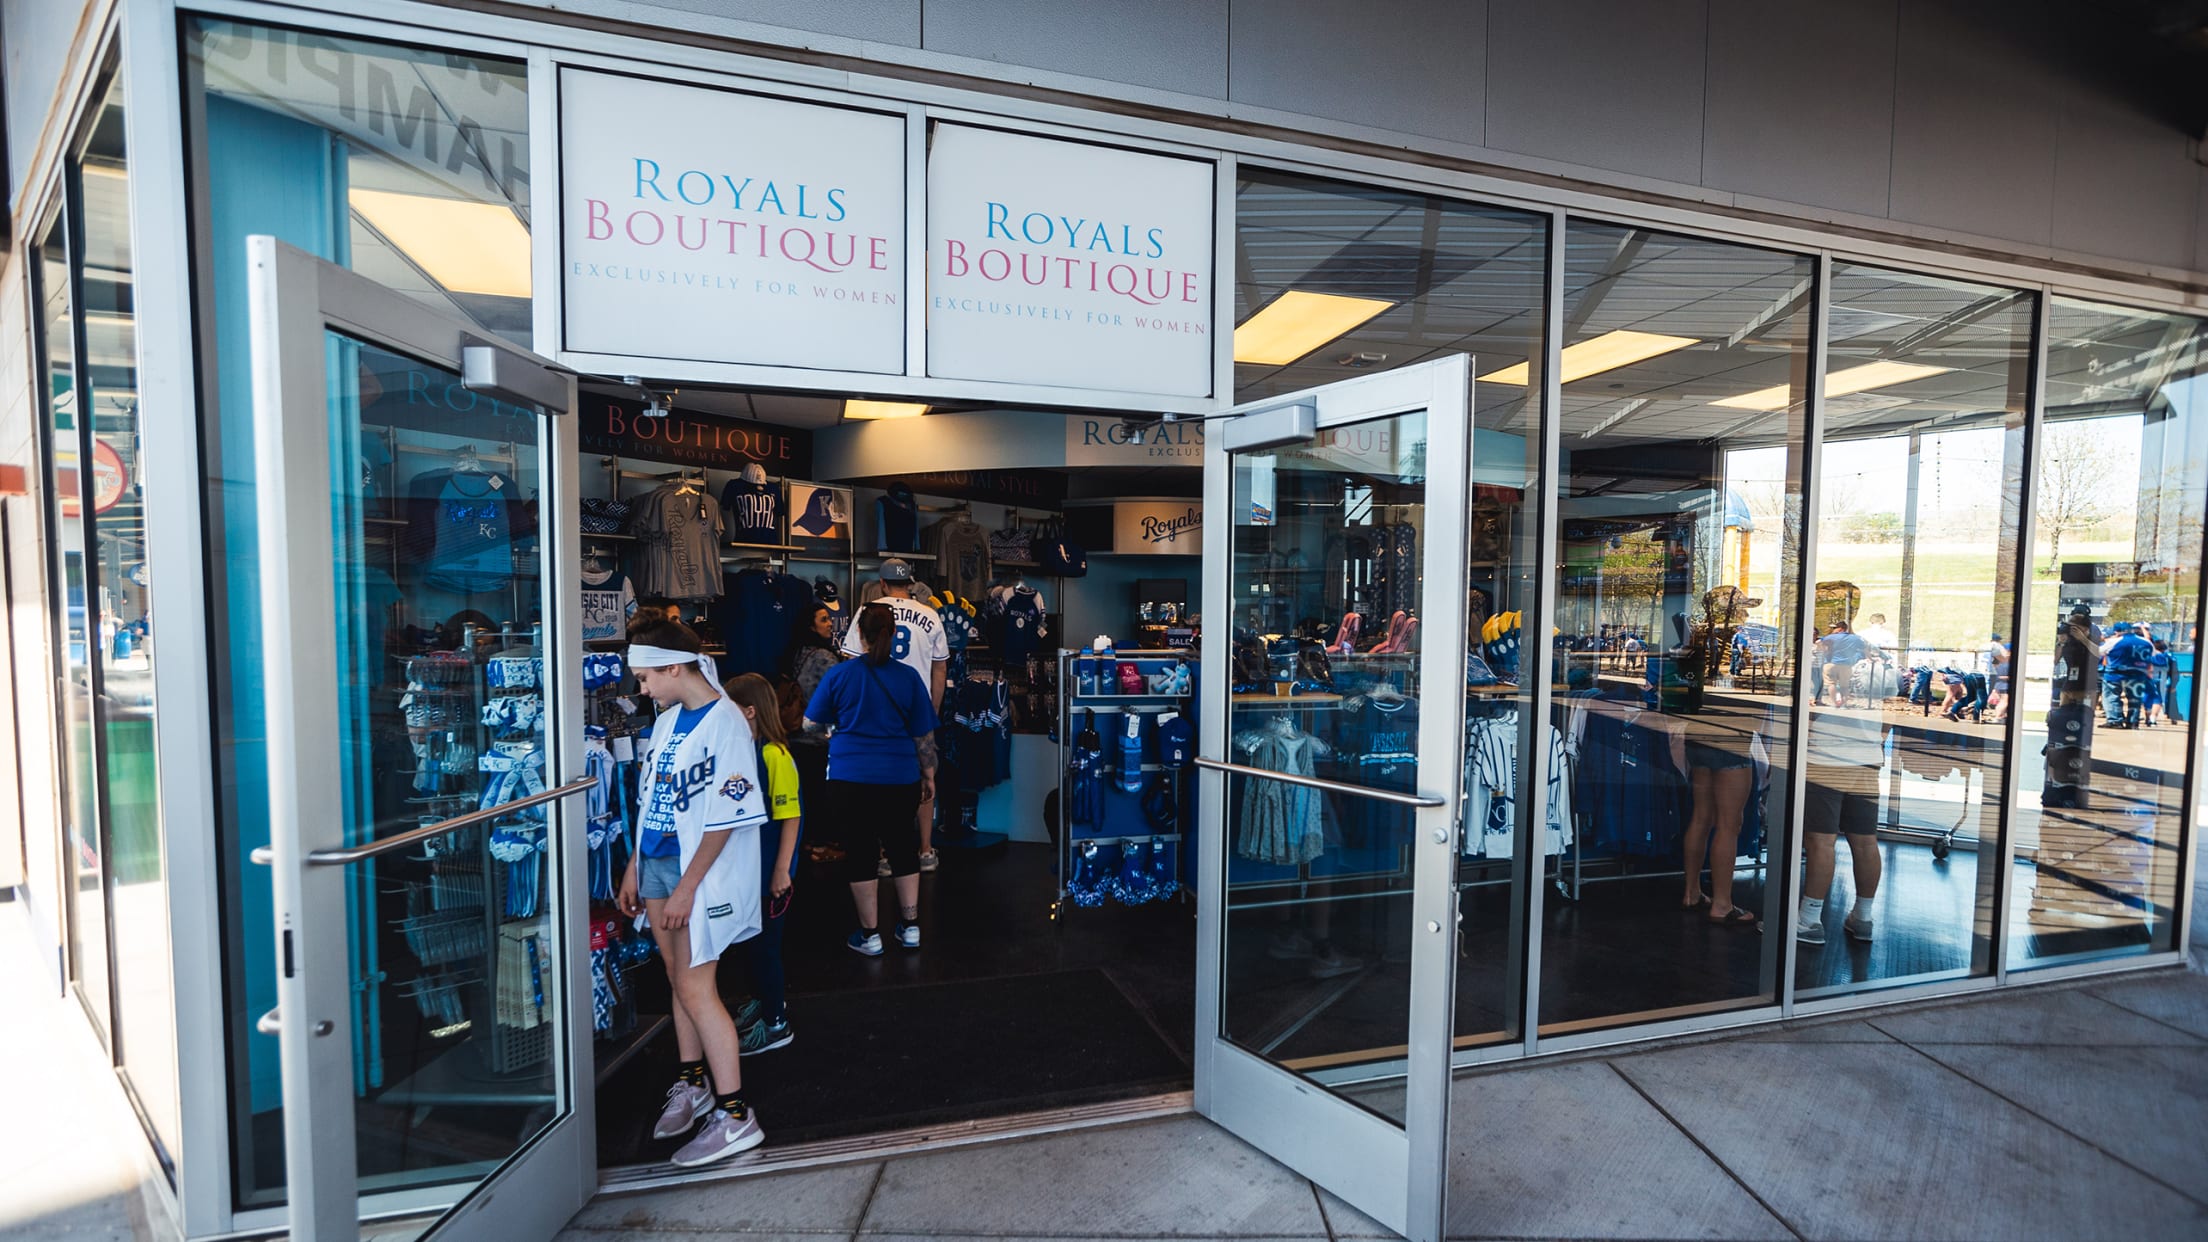 royals team store at kauffman stadium